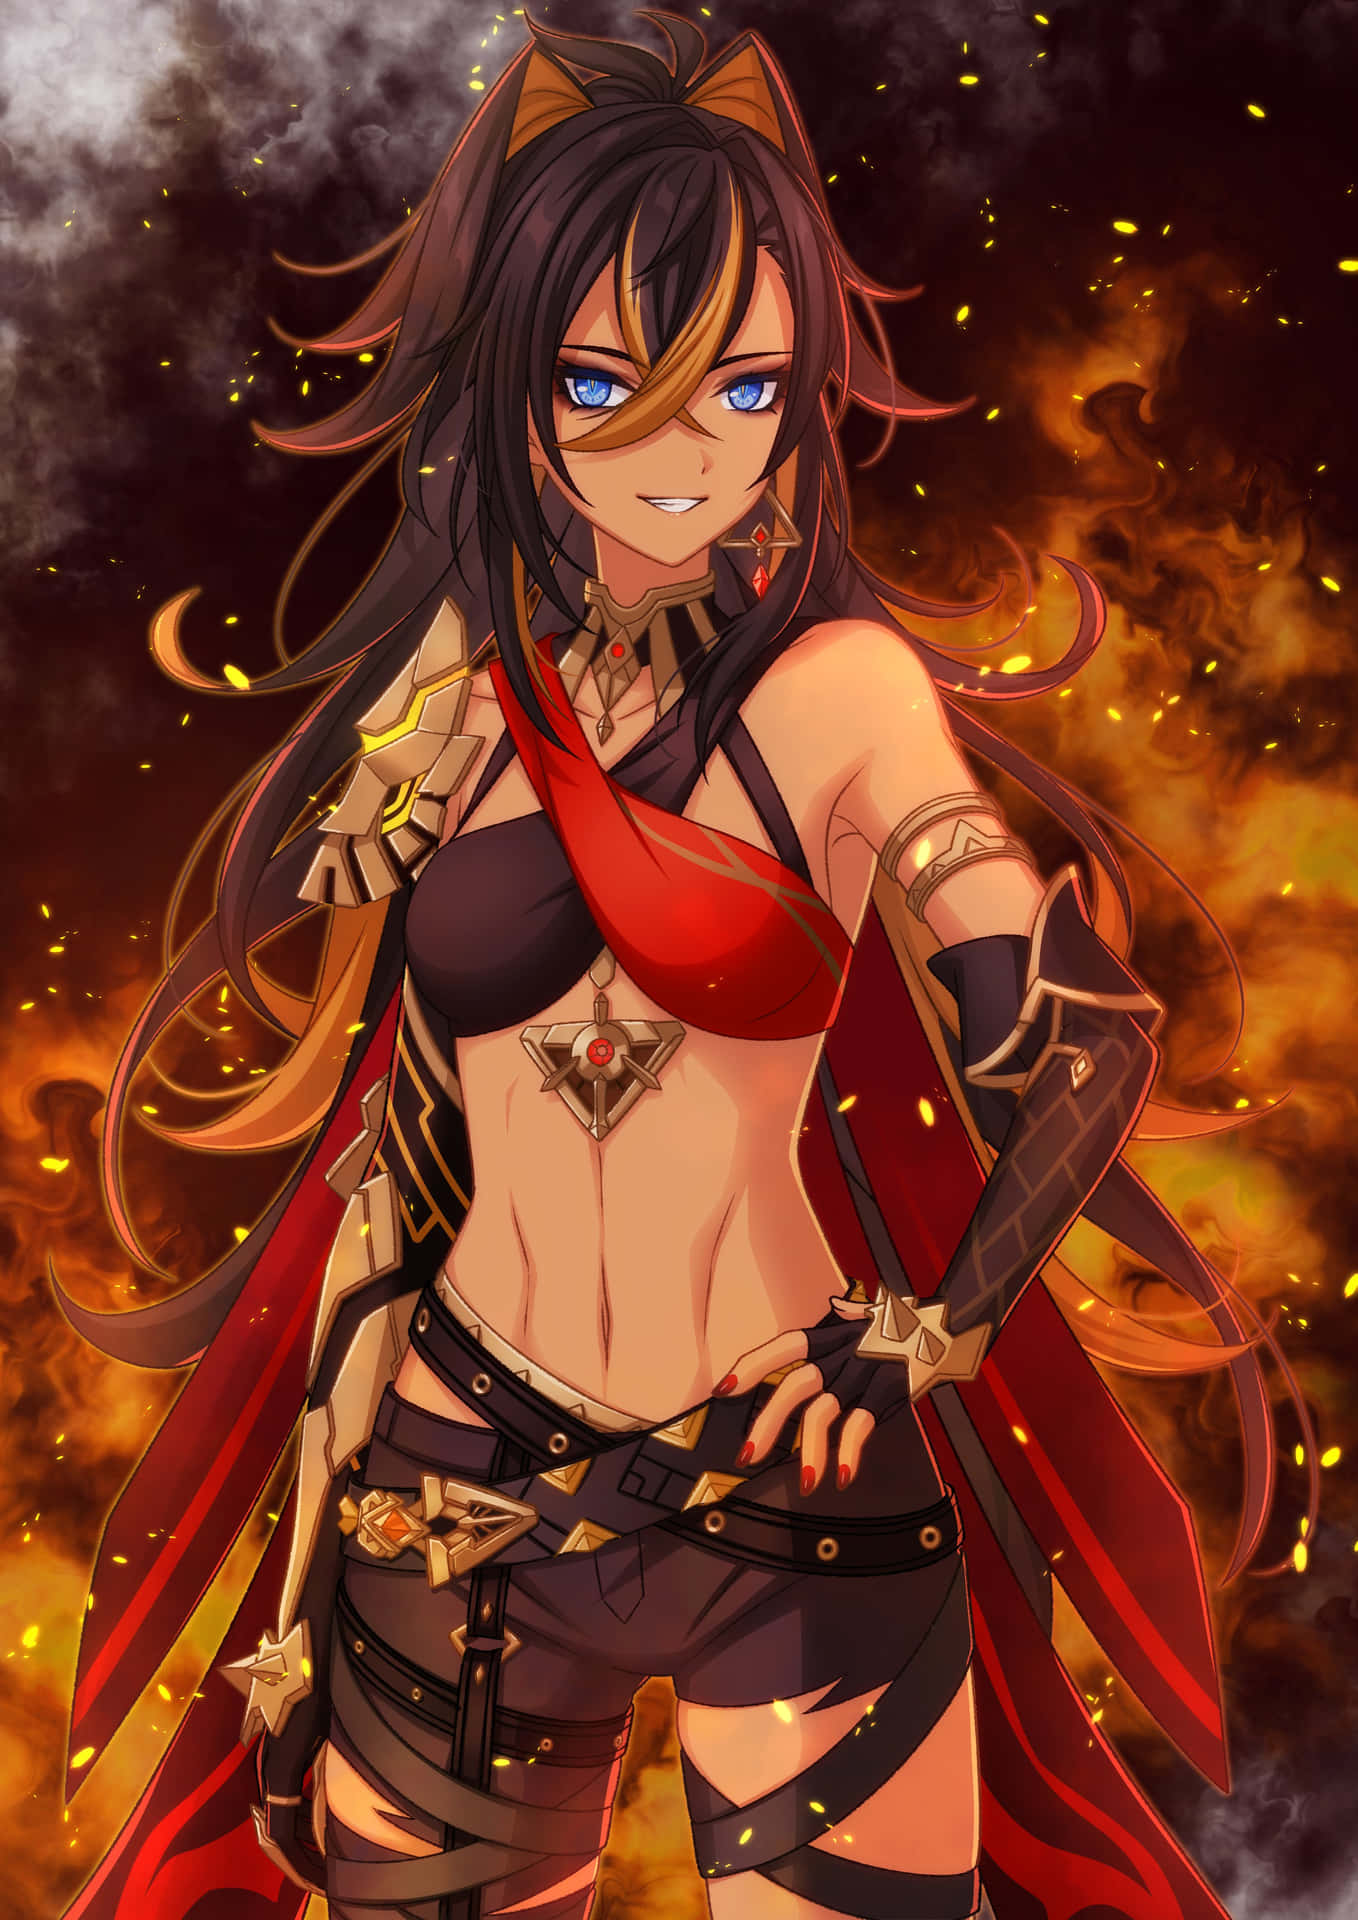 Flame Warrior Anime Art Wallpaper